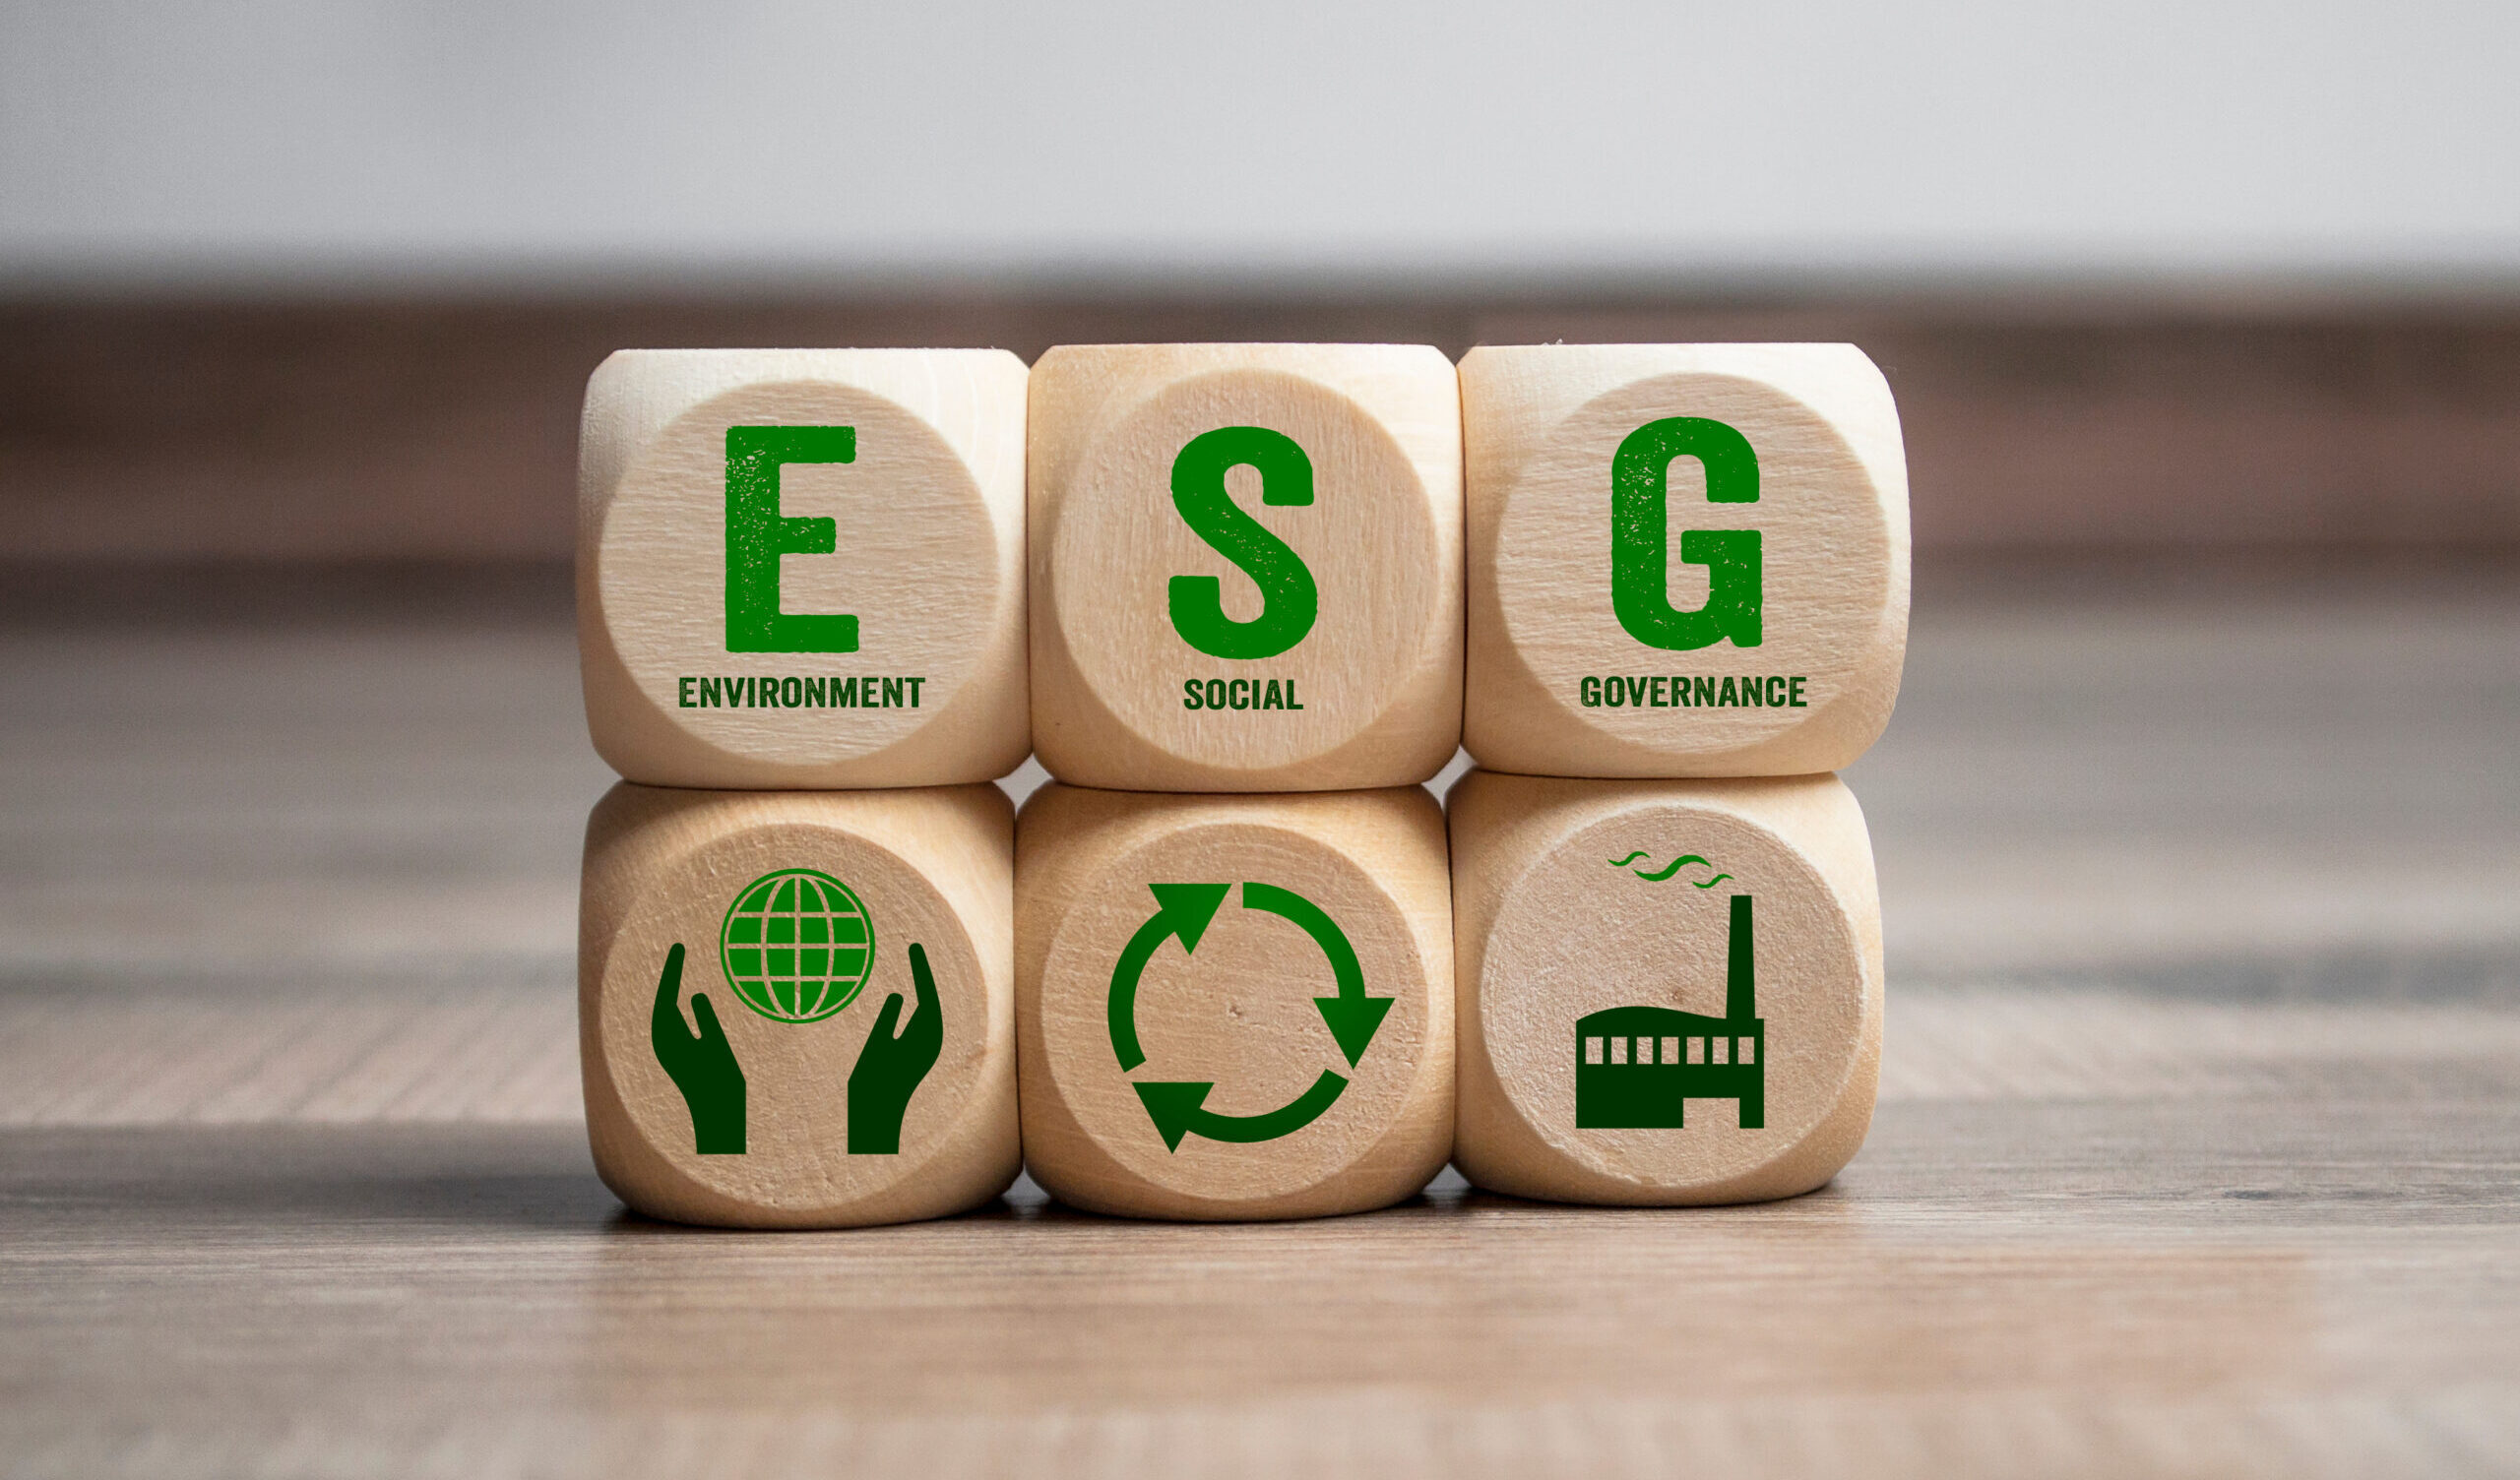 ESG, Environment, Social, Governance